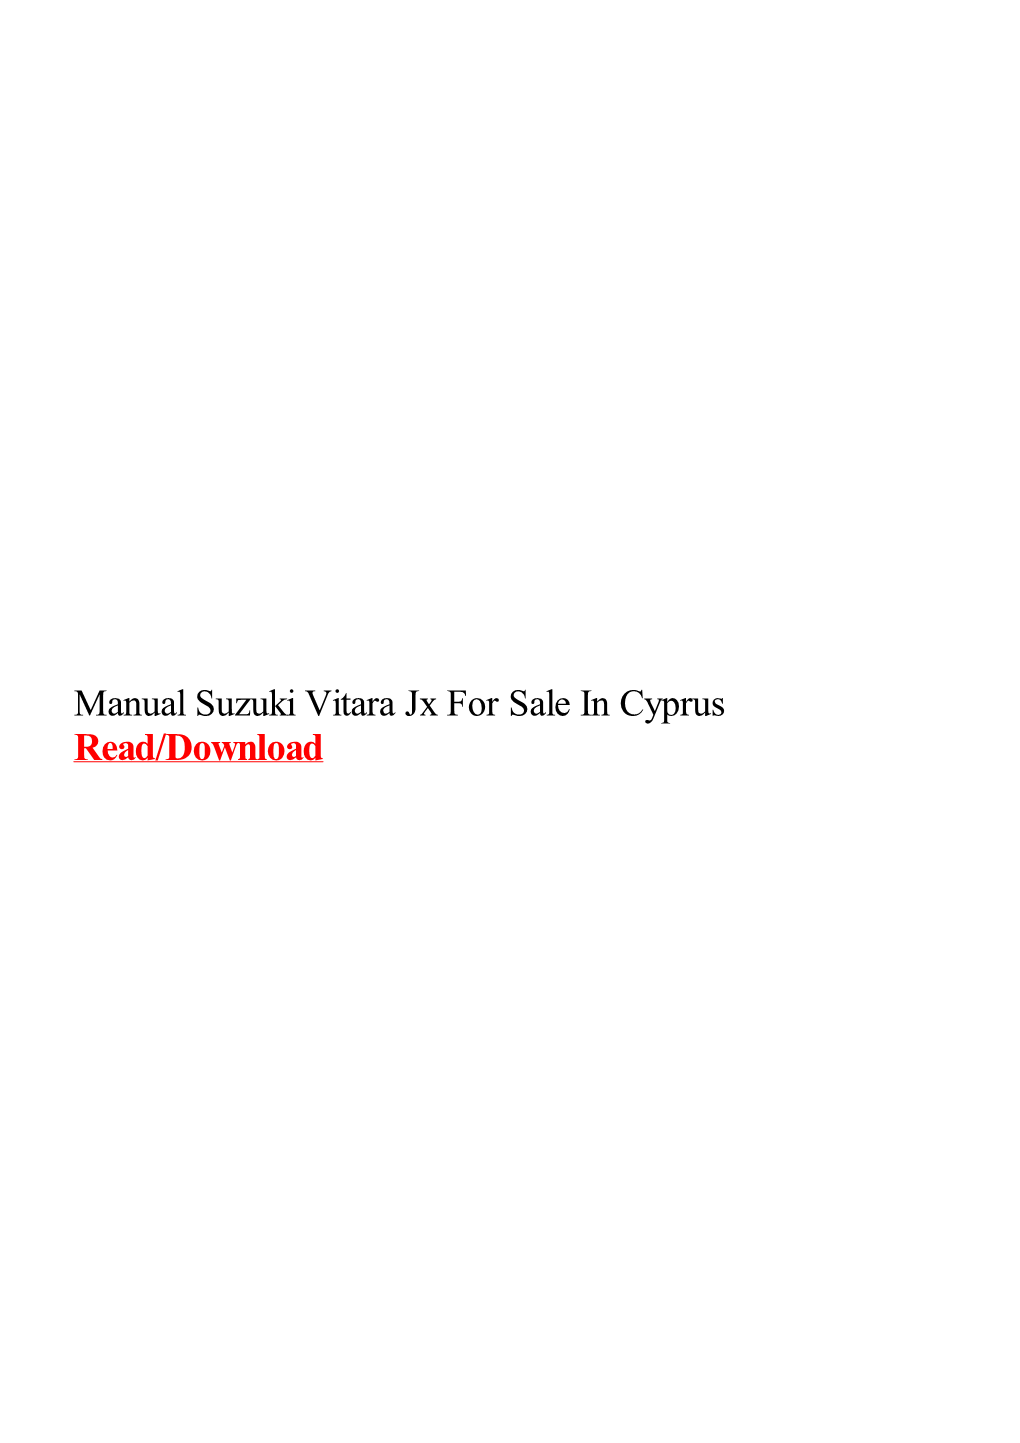 Manual Suzuki Vitara Jx for Sale in Cyprus.Pdf